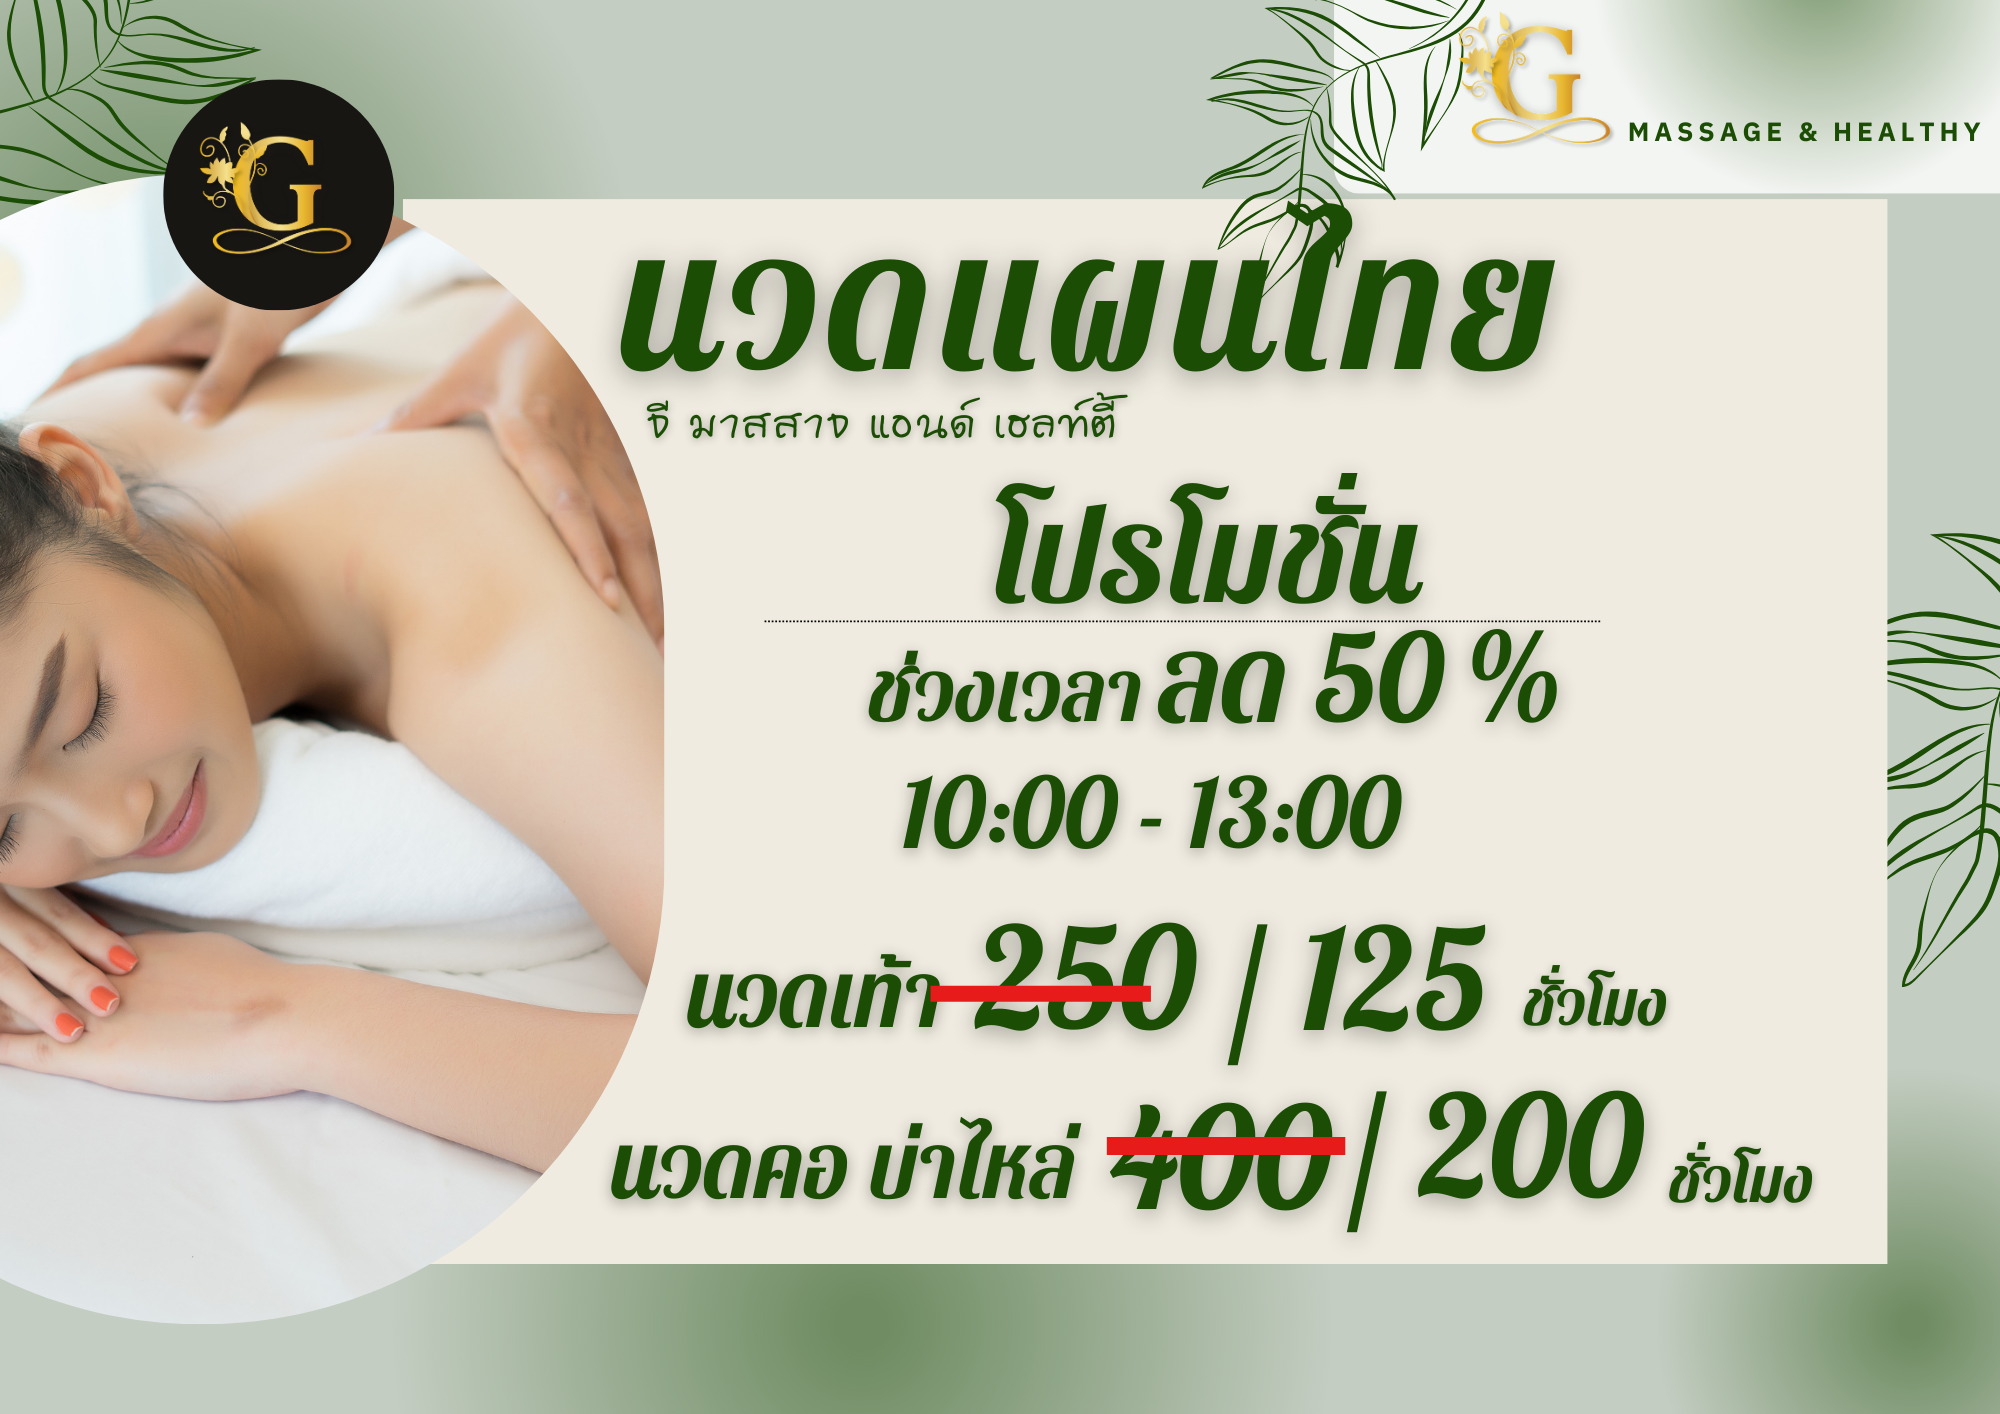 Massage shop near me Cheap Thai massage 0629162214 รูปที่ 1